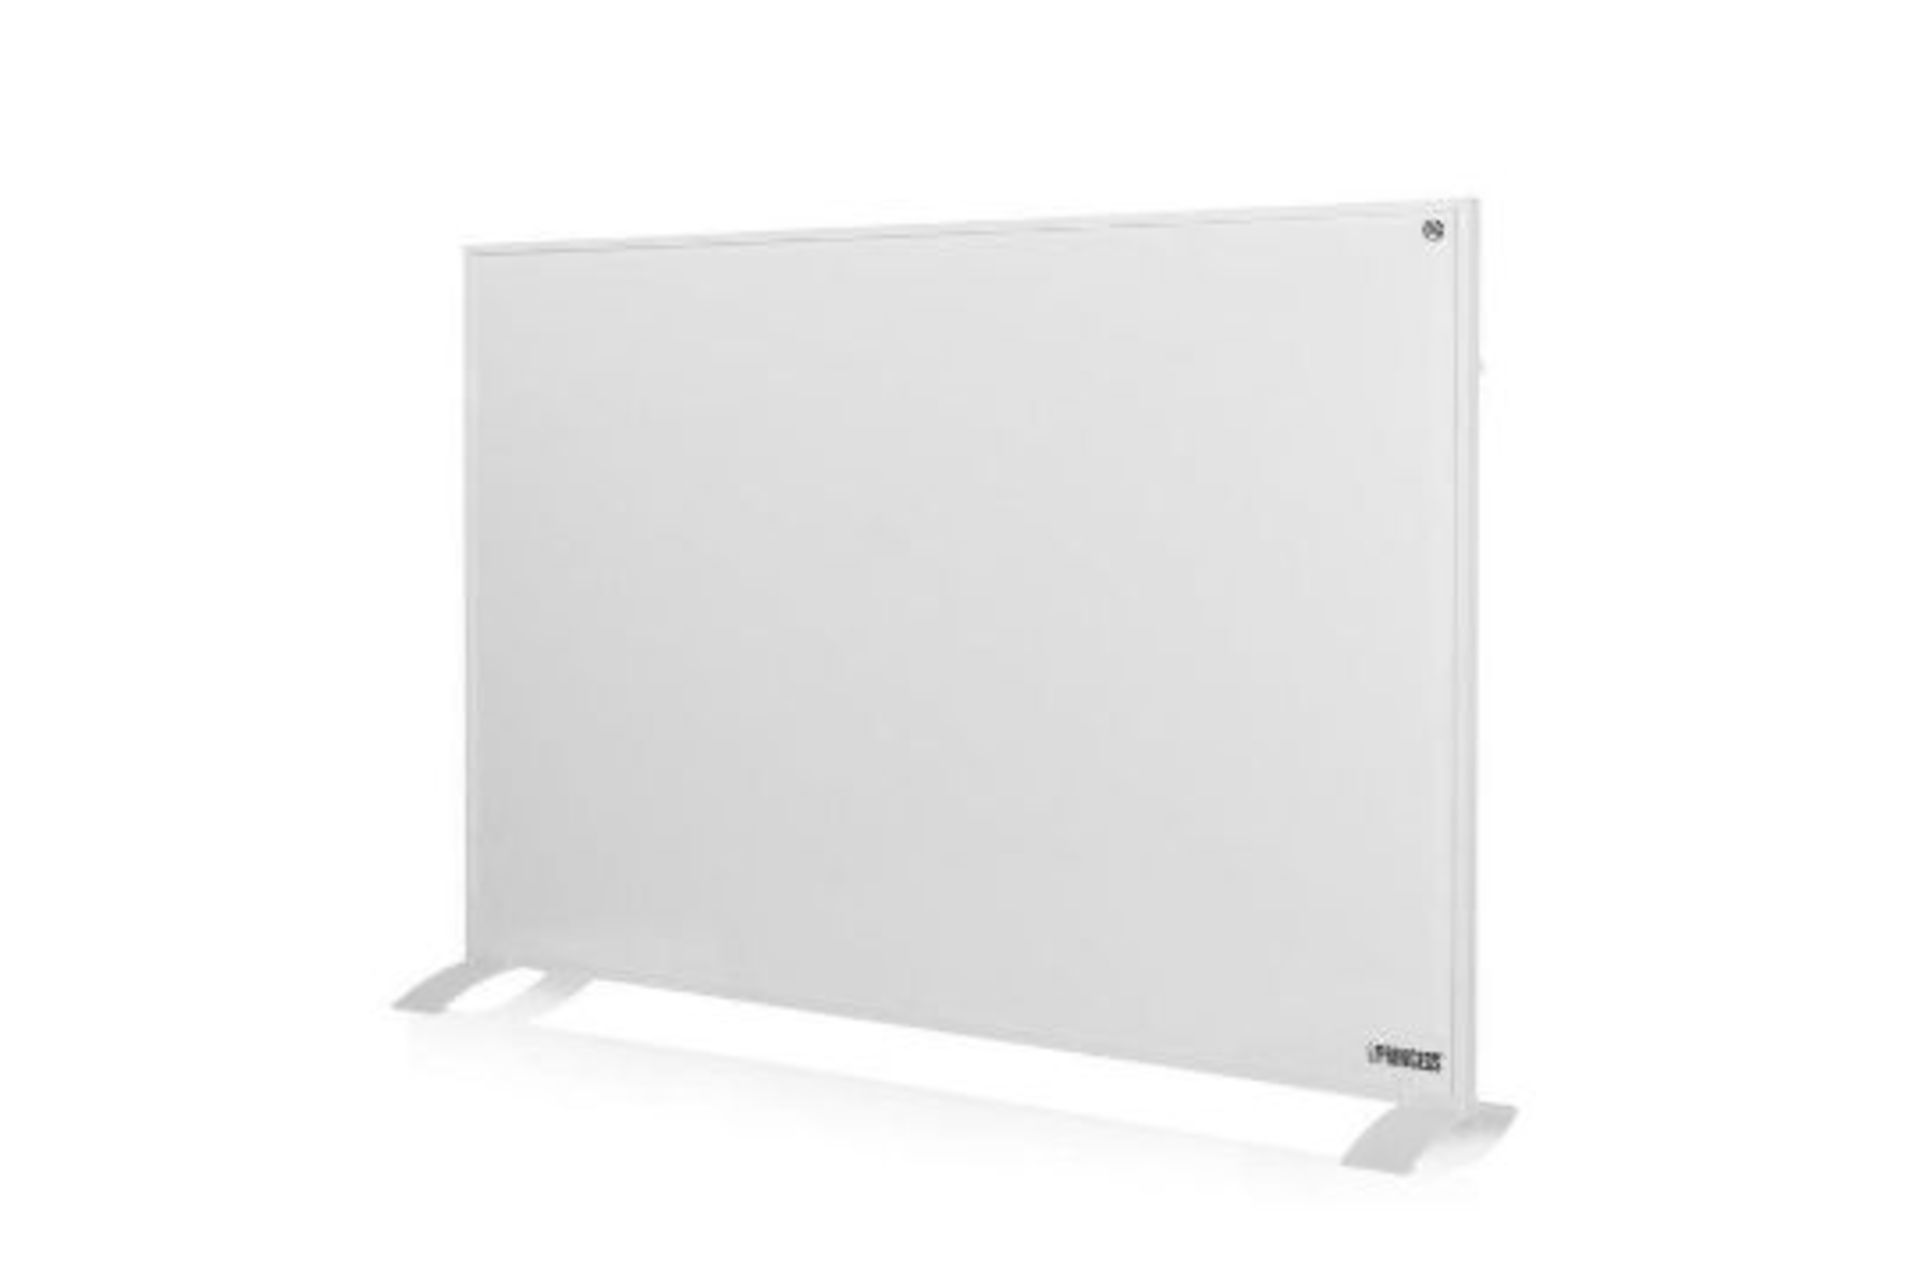 Princess 348054 Smart Infrared Panel Heater - WhiteVisit Shop Vacuums & Floorcare Kitchen Appliances